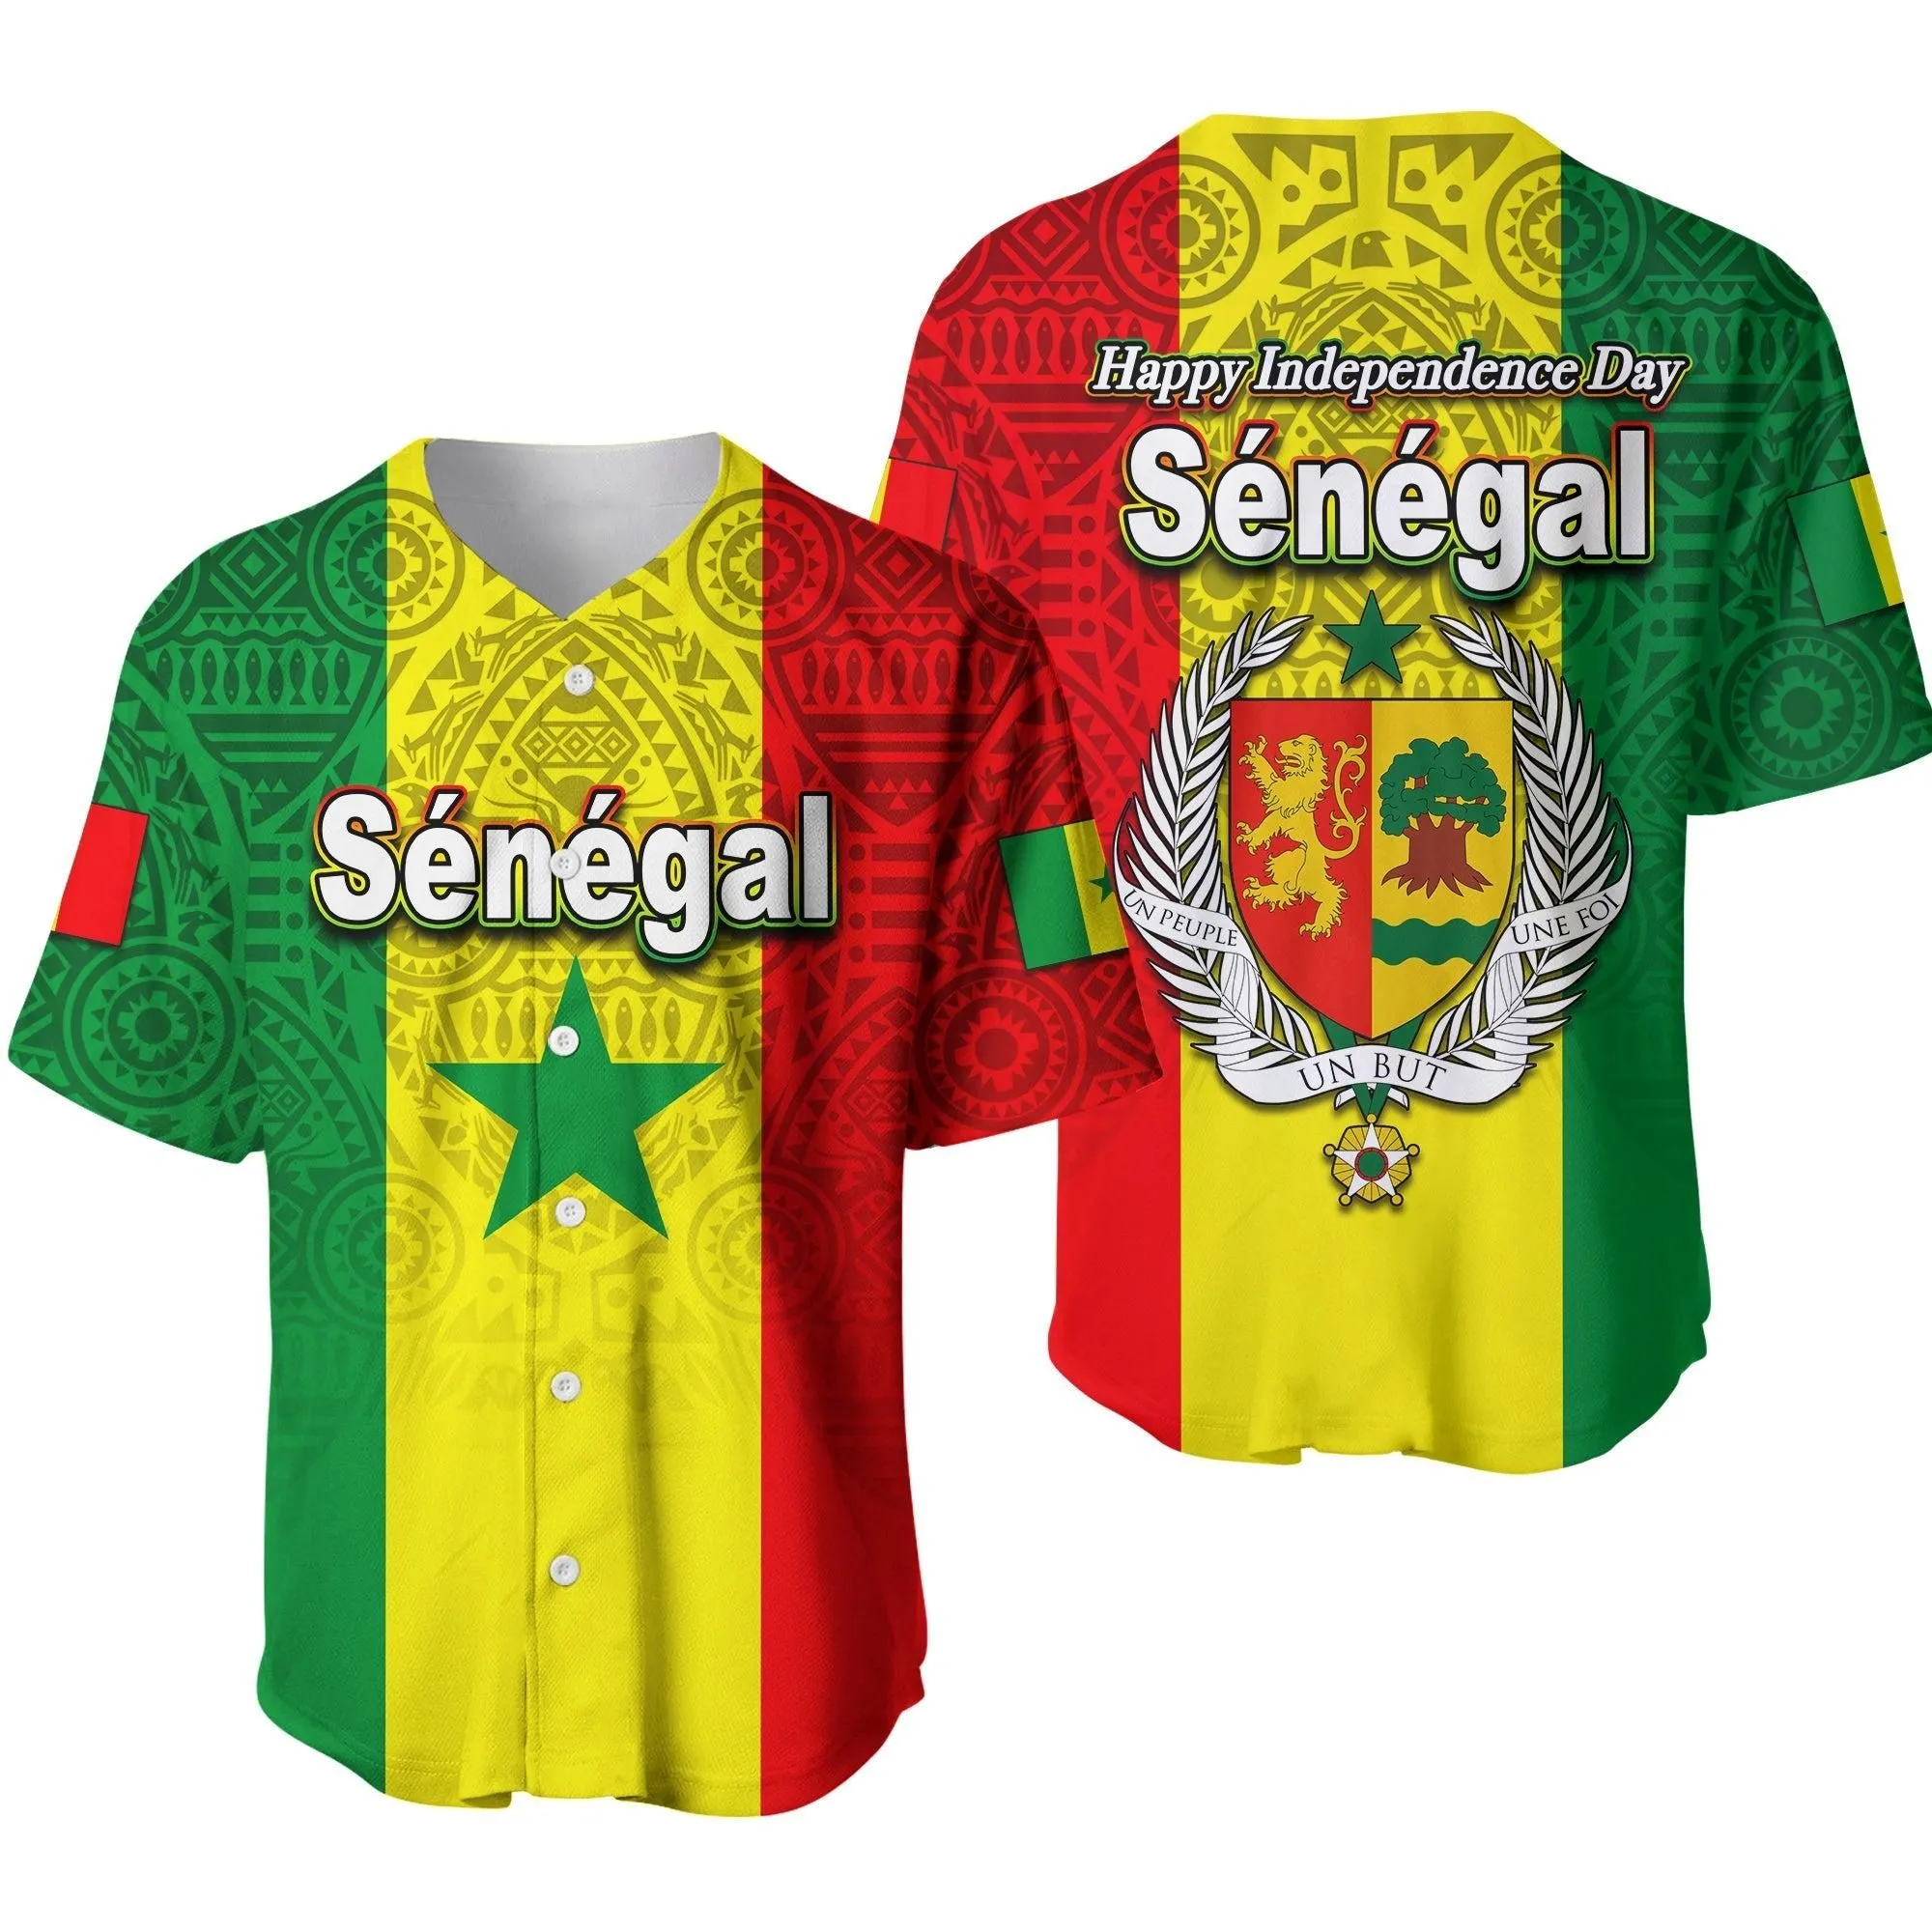 Senegal Independence Day Baseball Shirt African Pattens Lt6_2